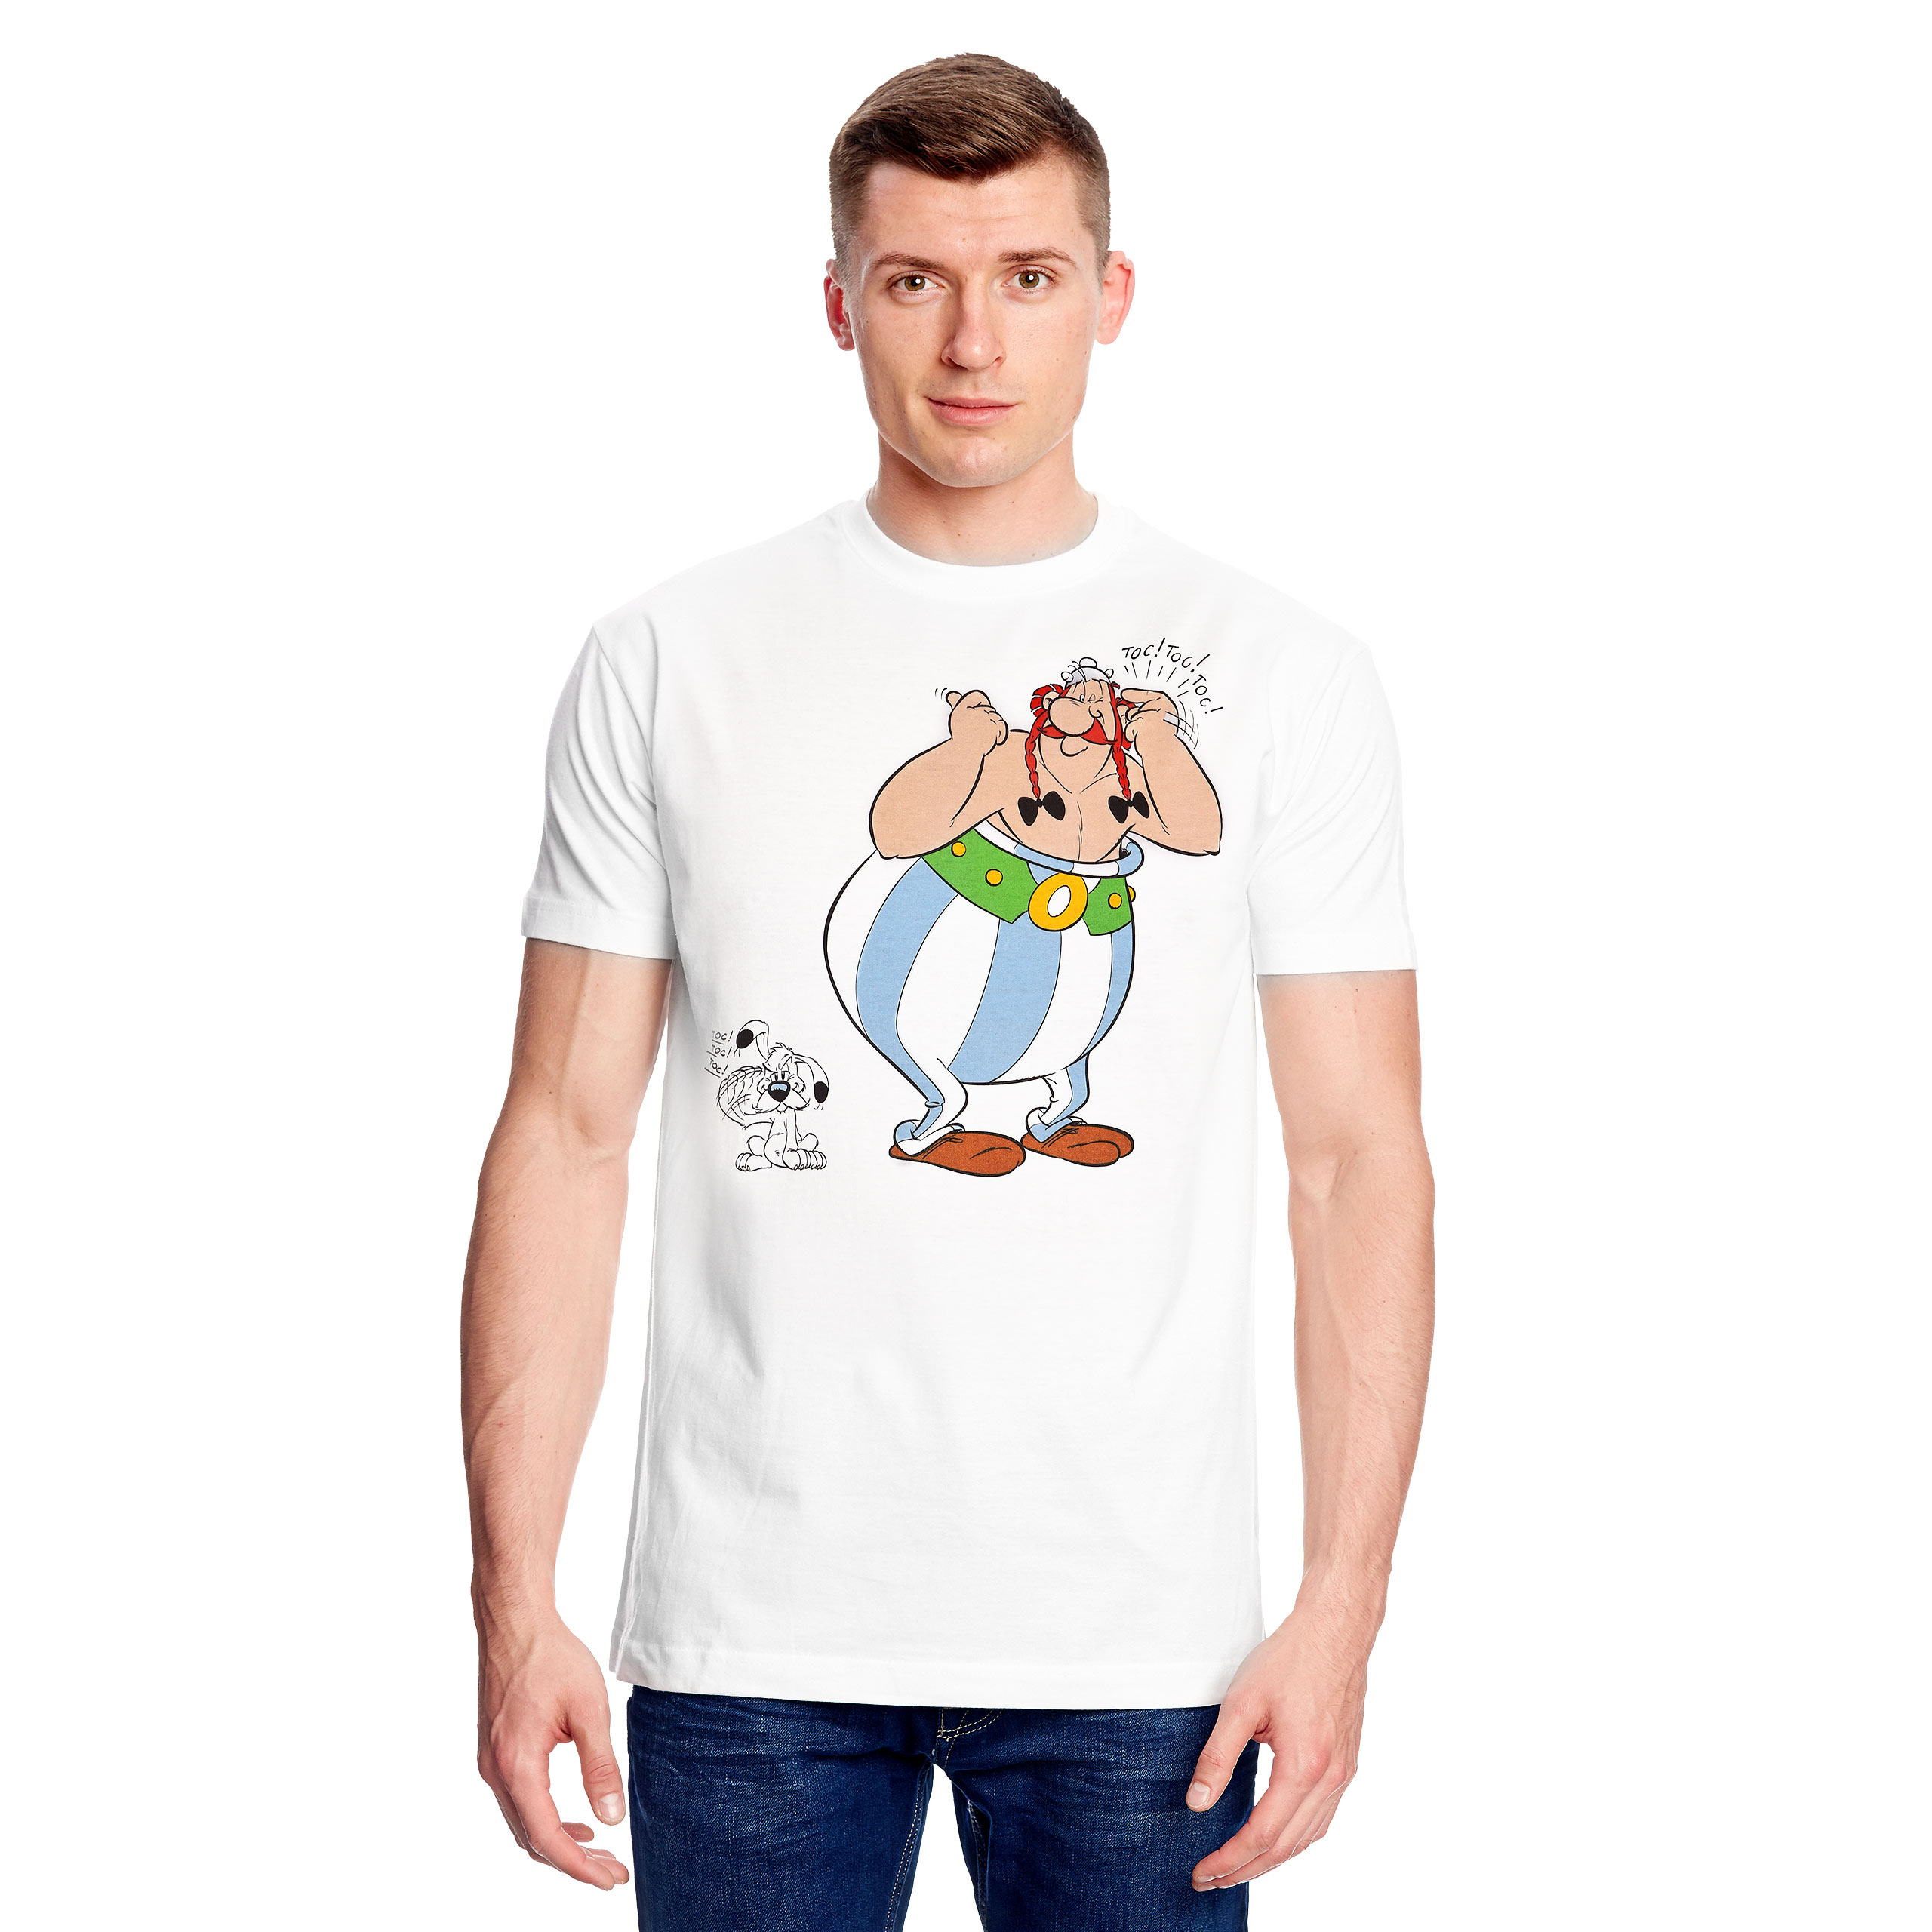 Asterix - Obelix und Idefix T-Shirt weiß